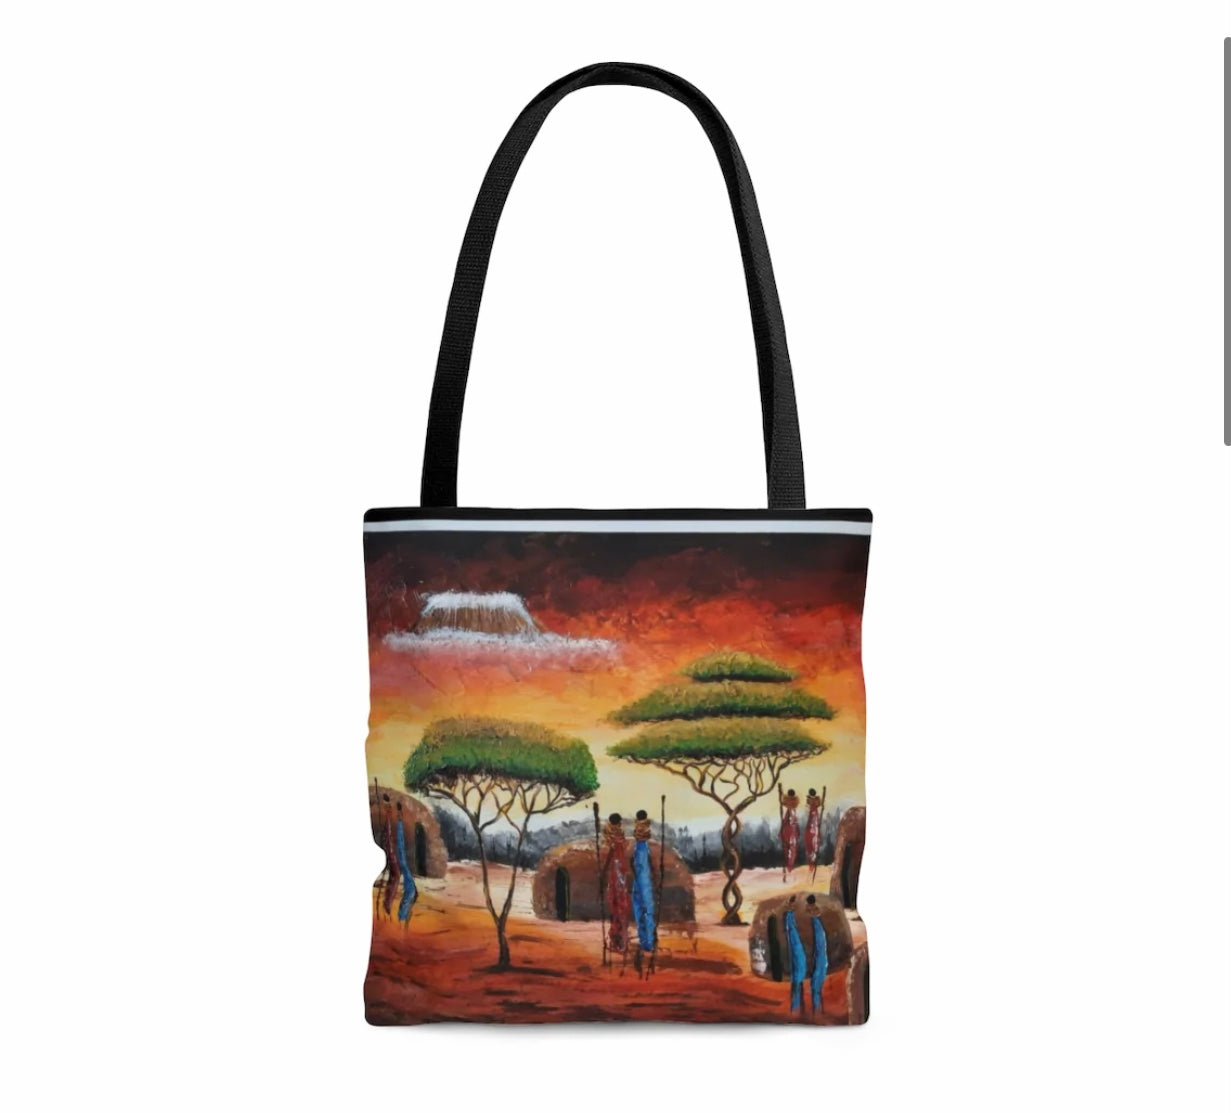 Dickson’s African Village Bag Bundle